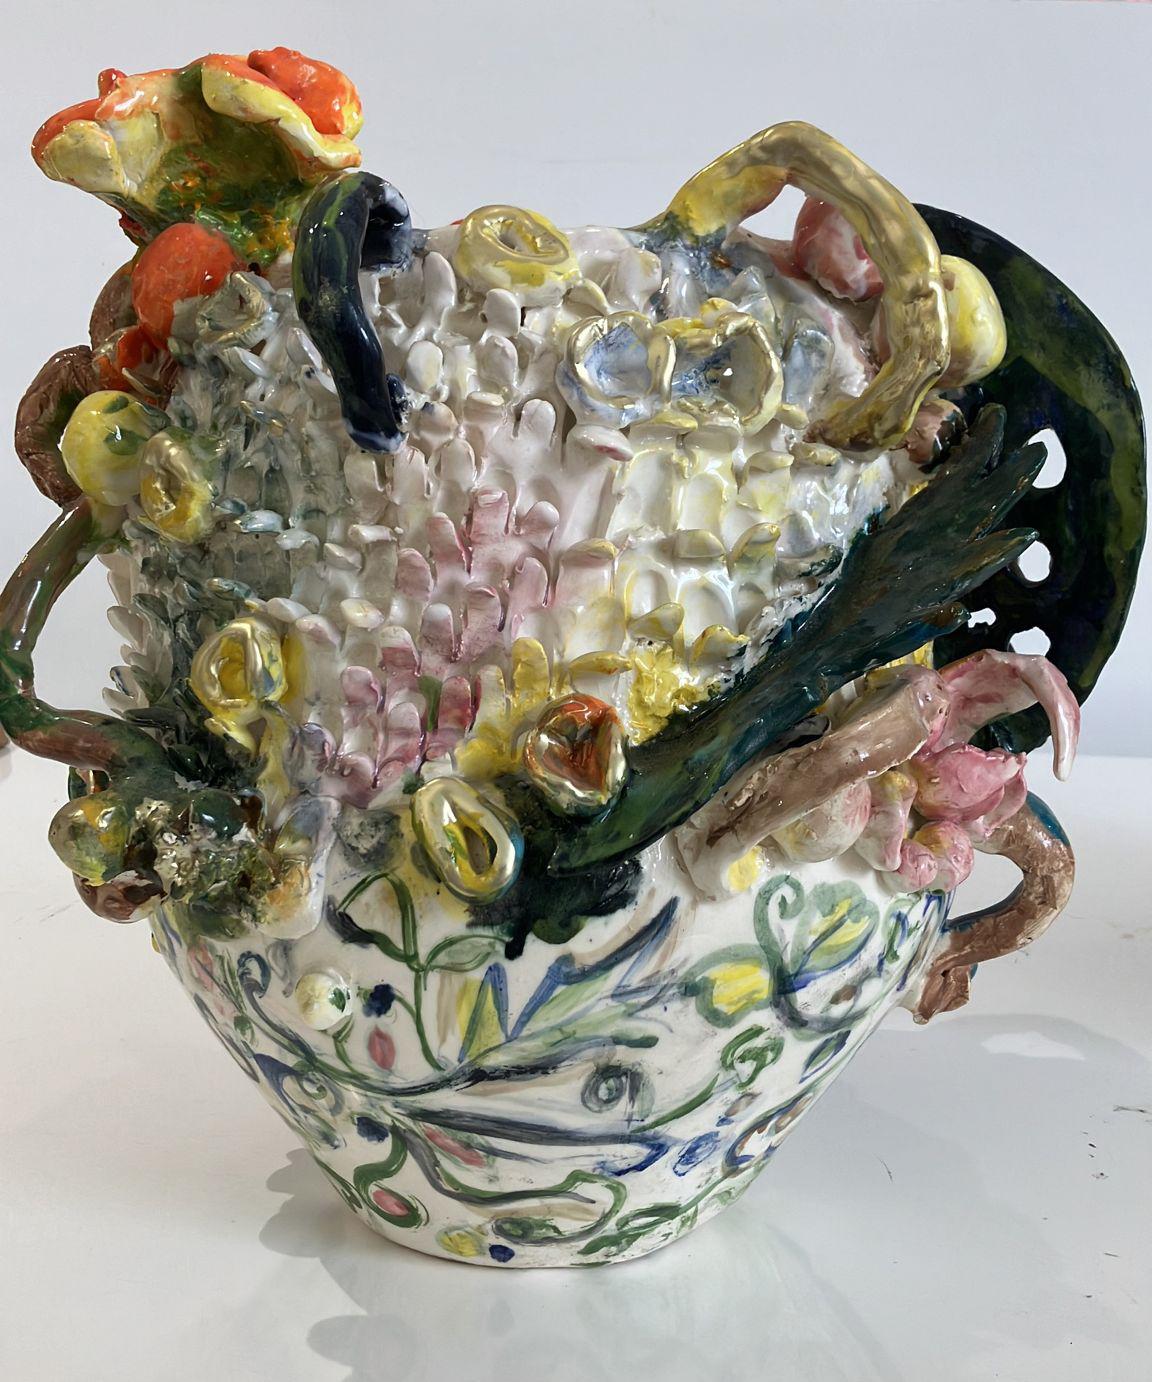 Green twirls flowers. Glazed ceramic abstract jar sculpture - Sculpture by Charo Oquet